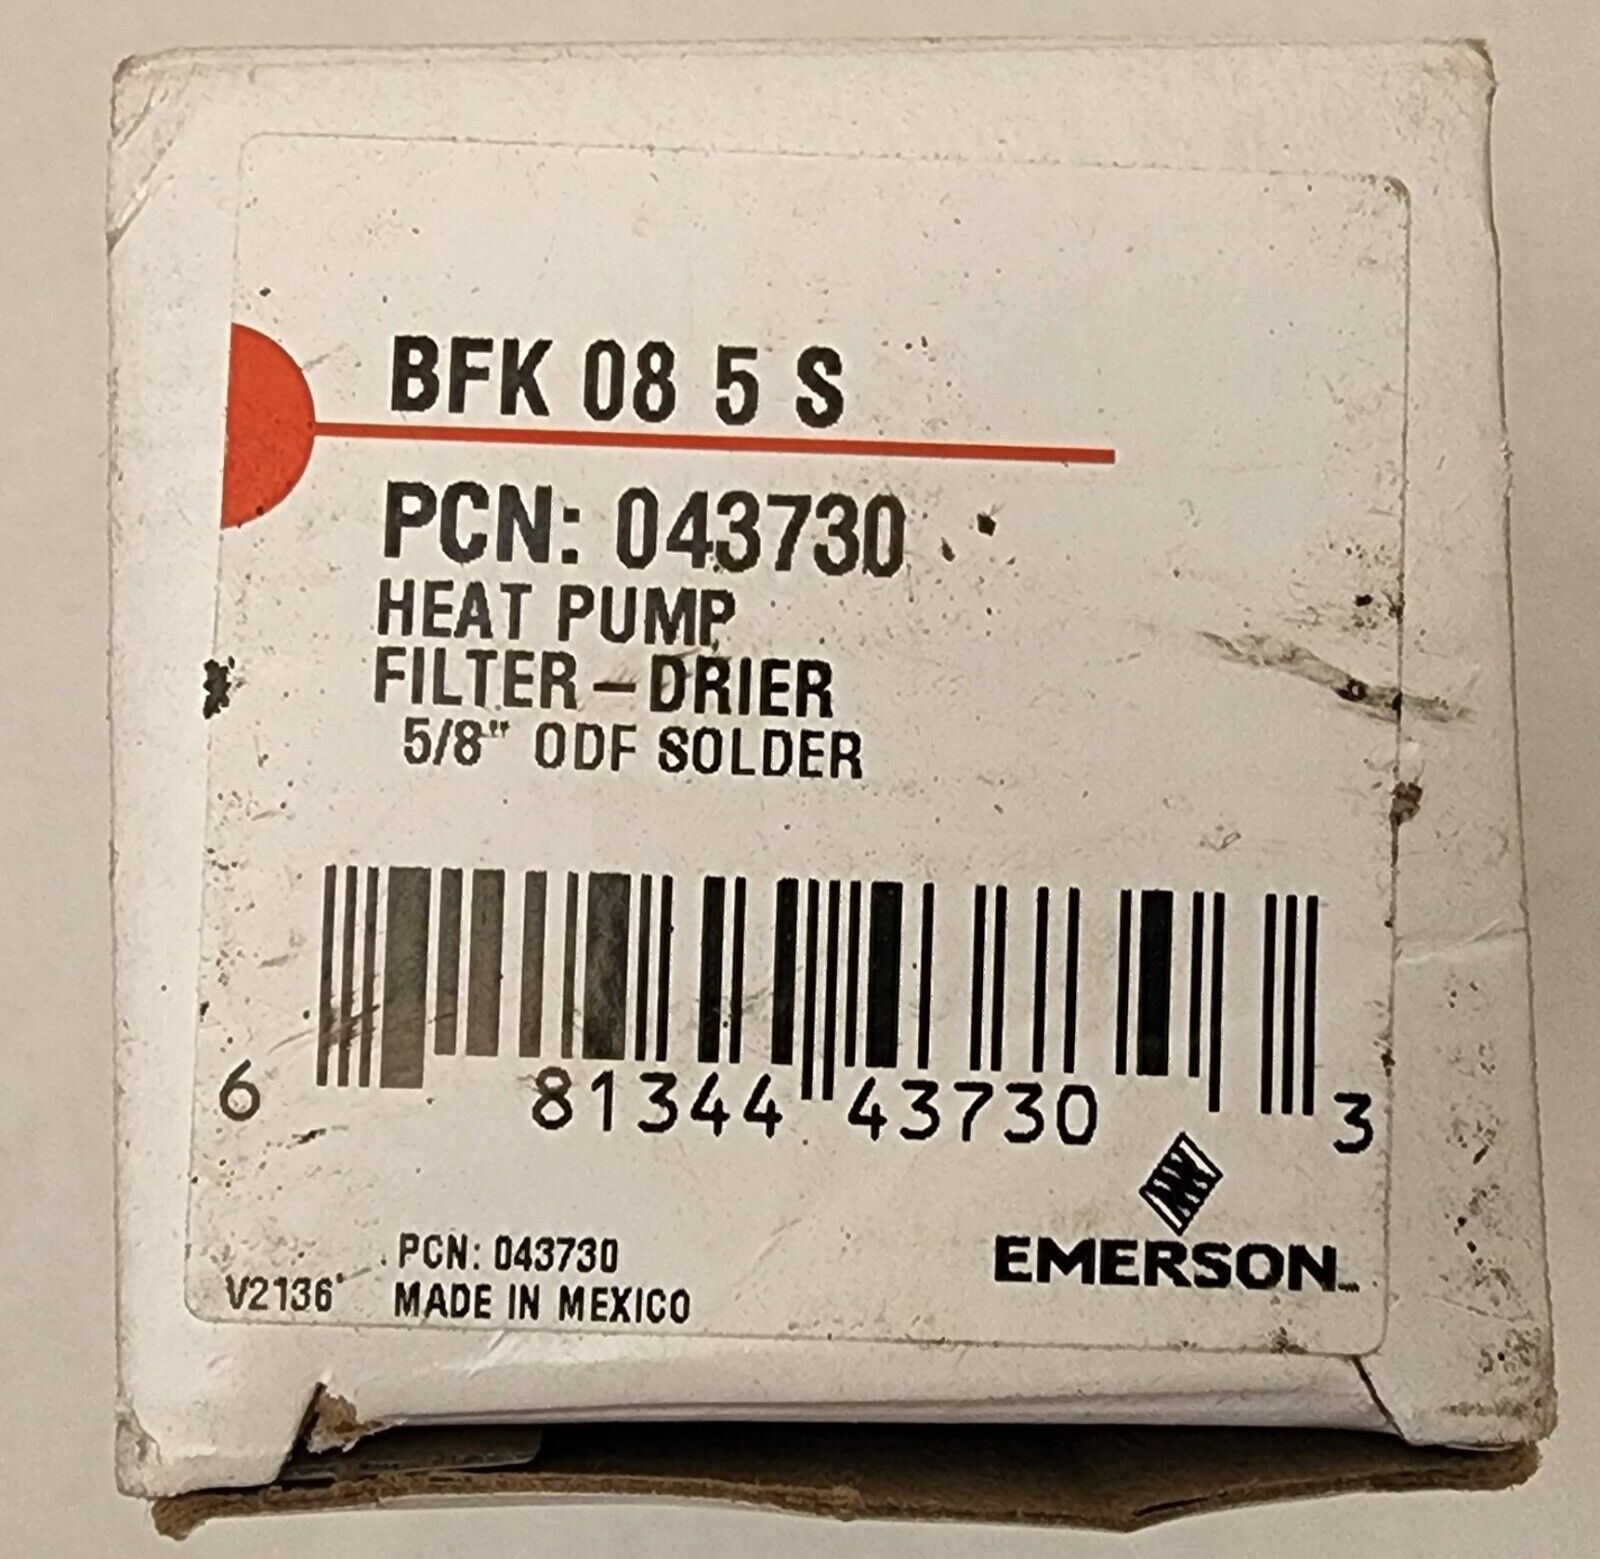 Primary image for Emerson - BFK-085 S - Heat Pump Filter-Drier - PCN: 043730 - 5/8" ODF SOLDER